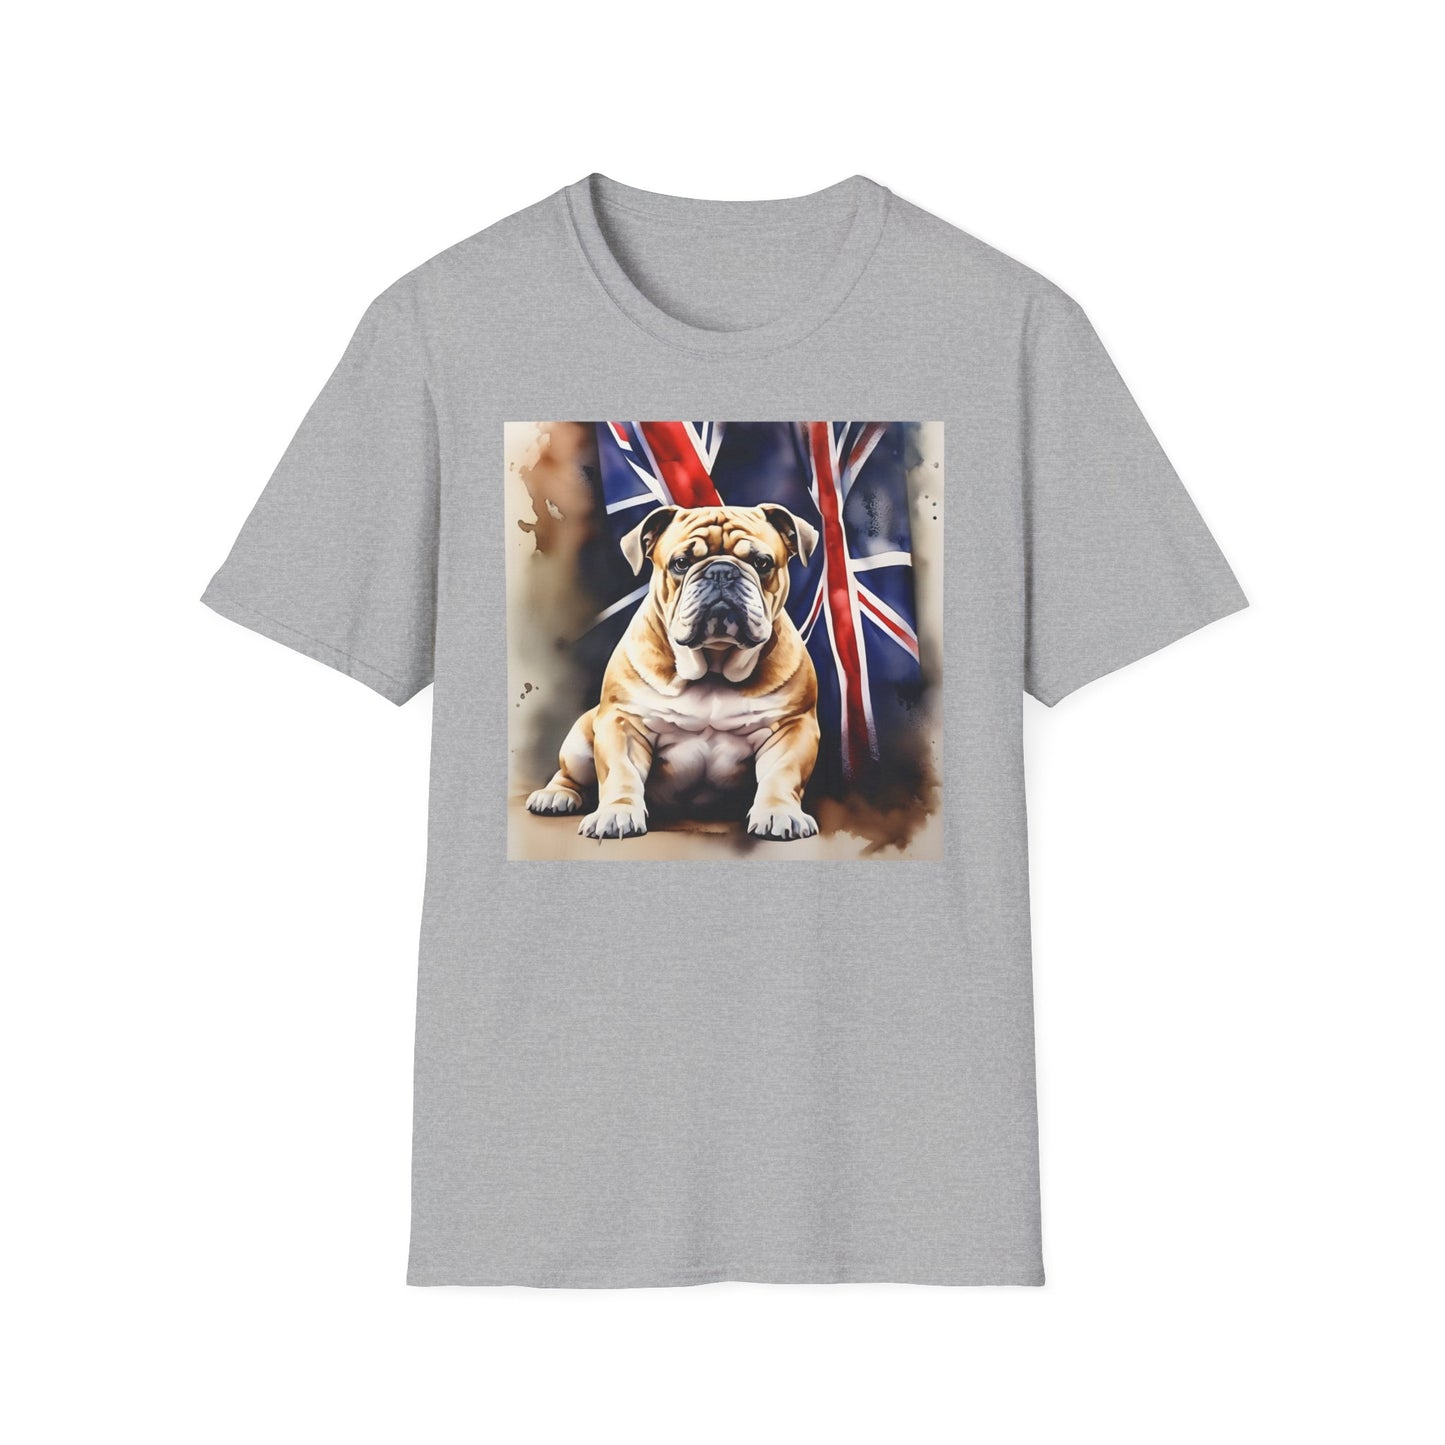 British Bulldog and Union Jack Flag T-Shirt